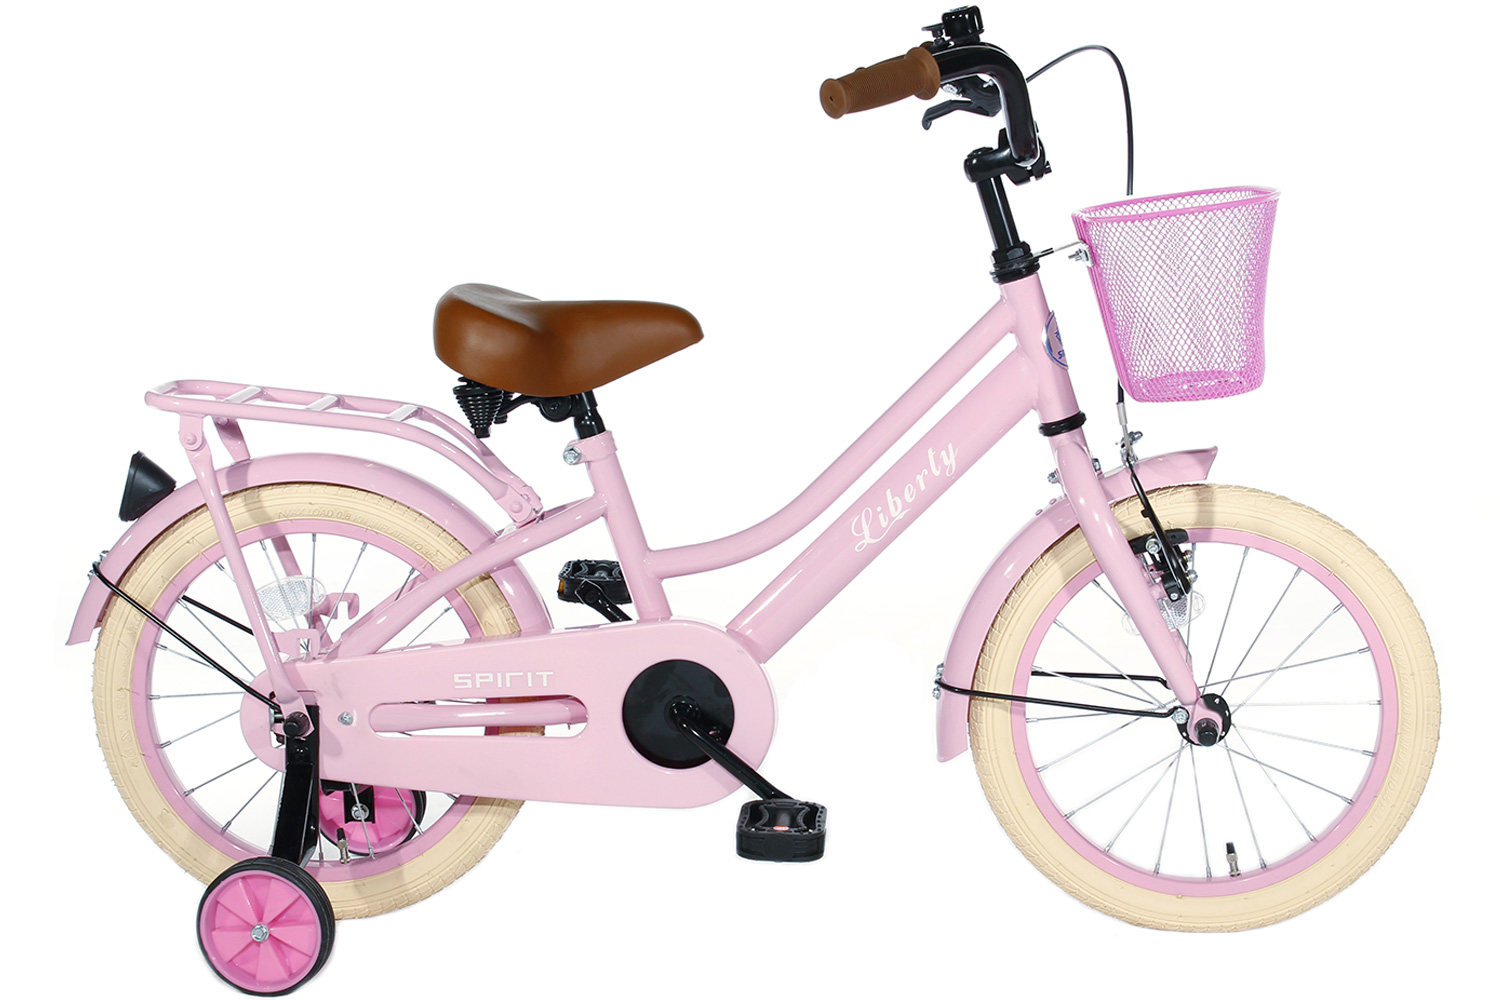 enkel Parameters helemaal Spirit Liberty Meisjesfiets Roze 16 Inch + Mand | City-Bikes.nl